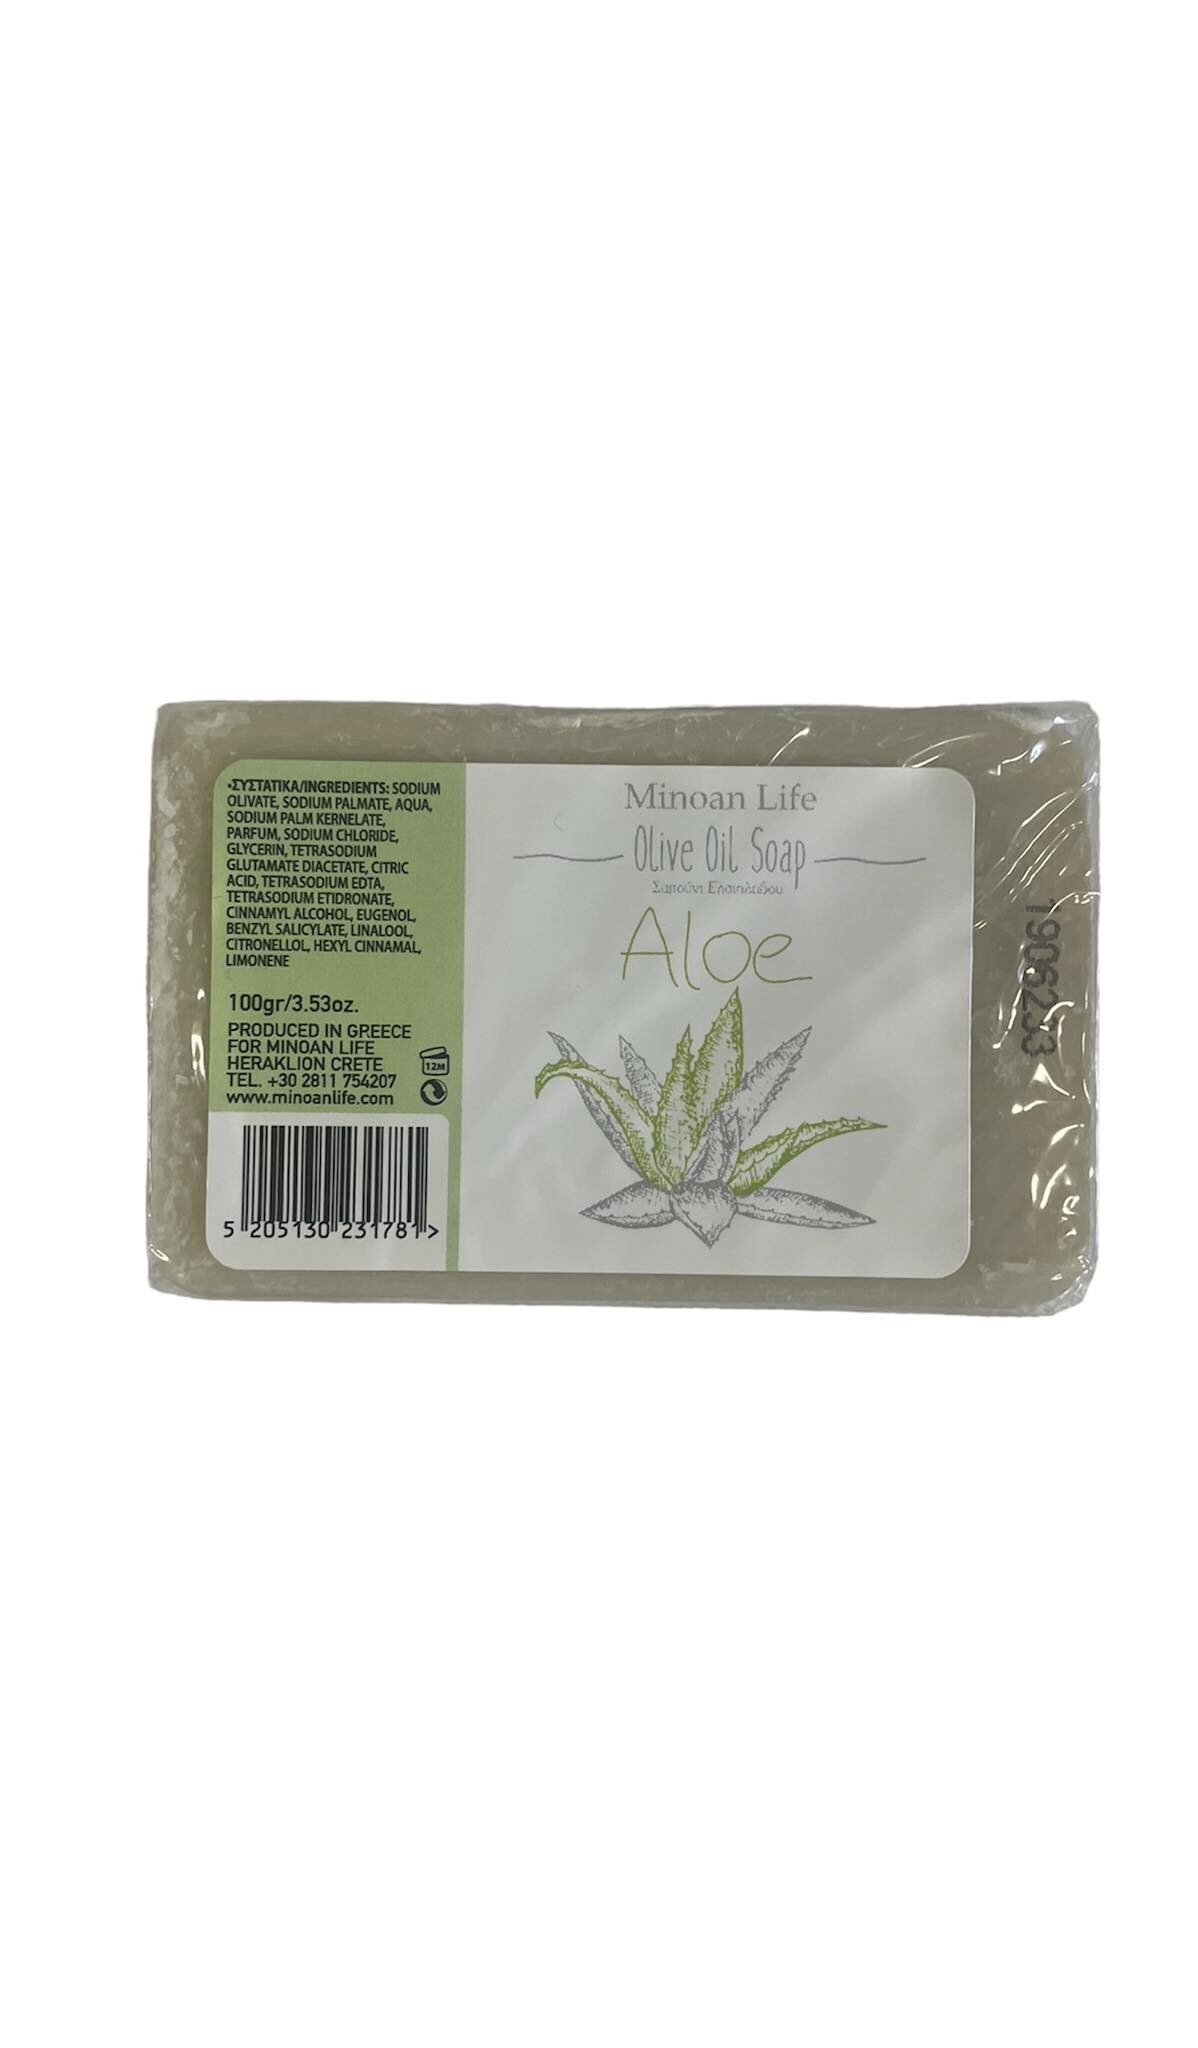 Minoan Life Olive Oil Soap Aloe